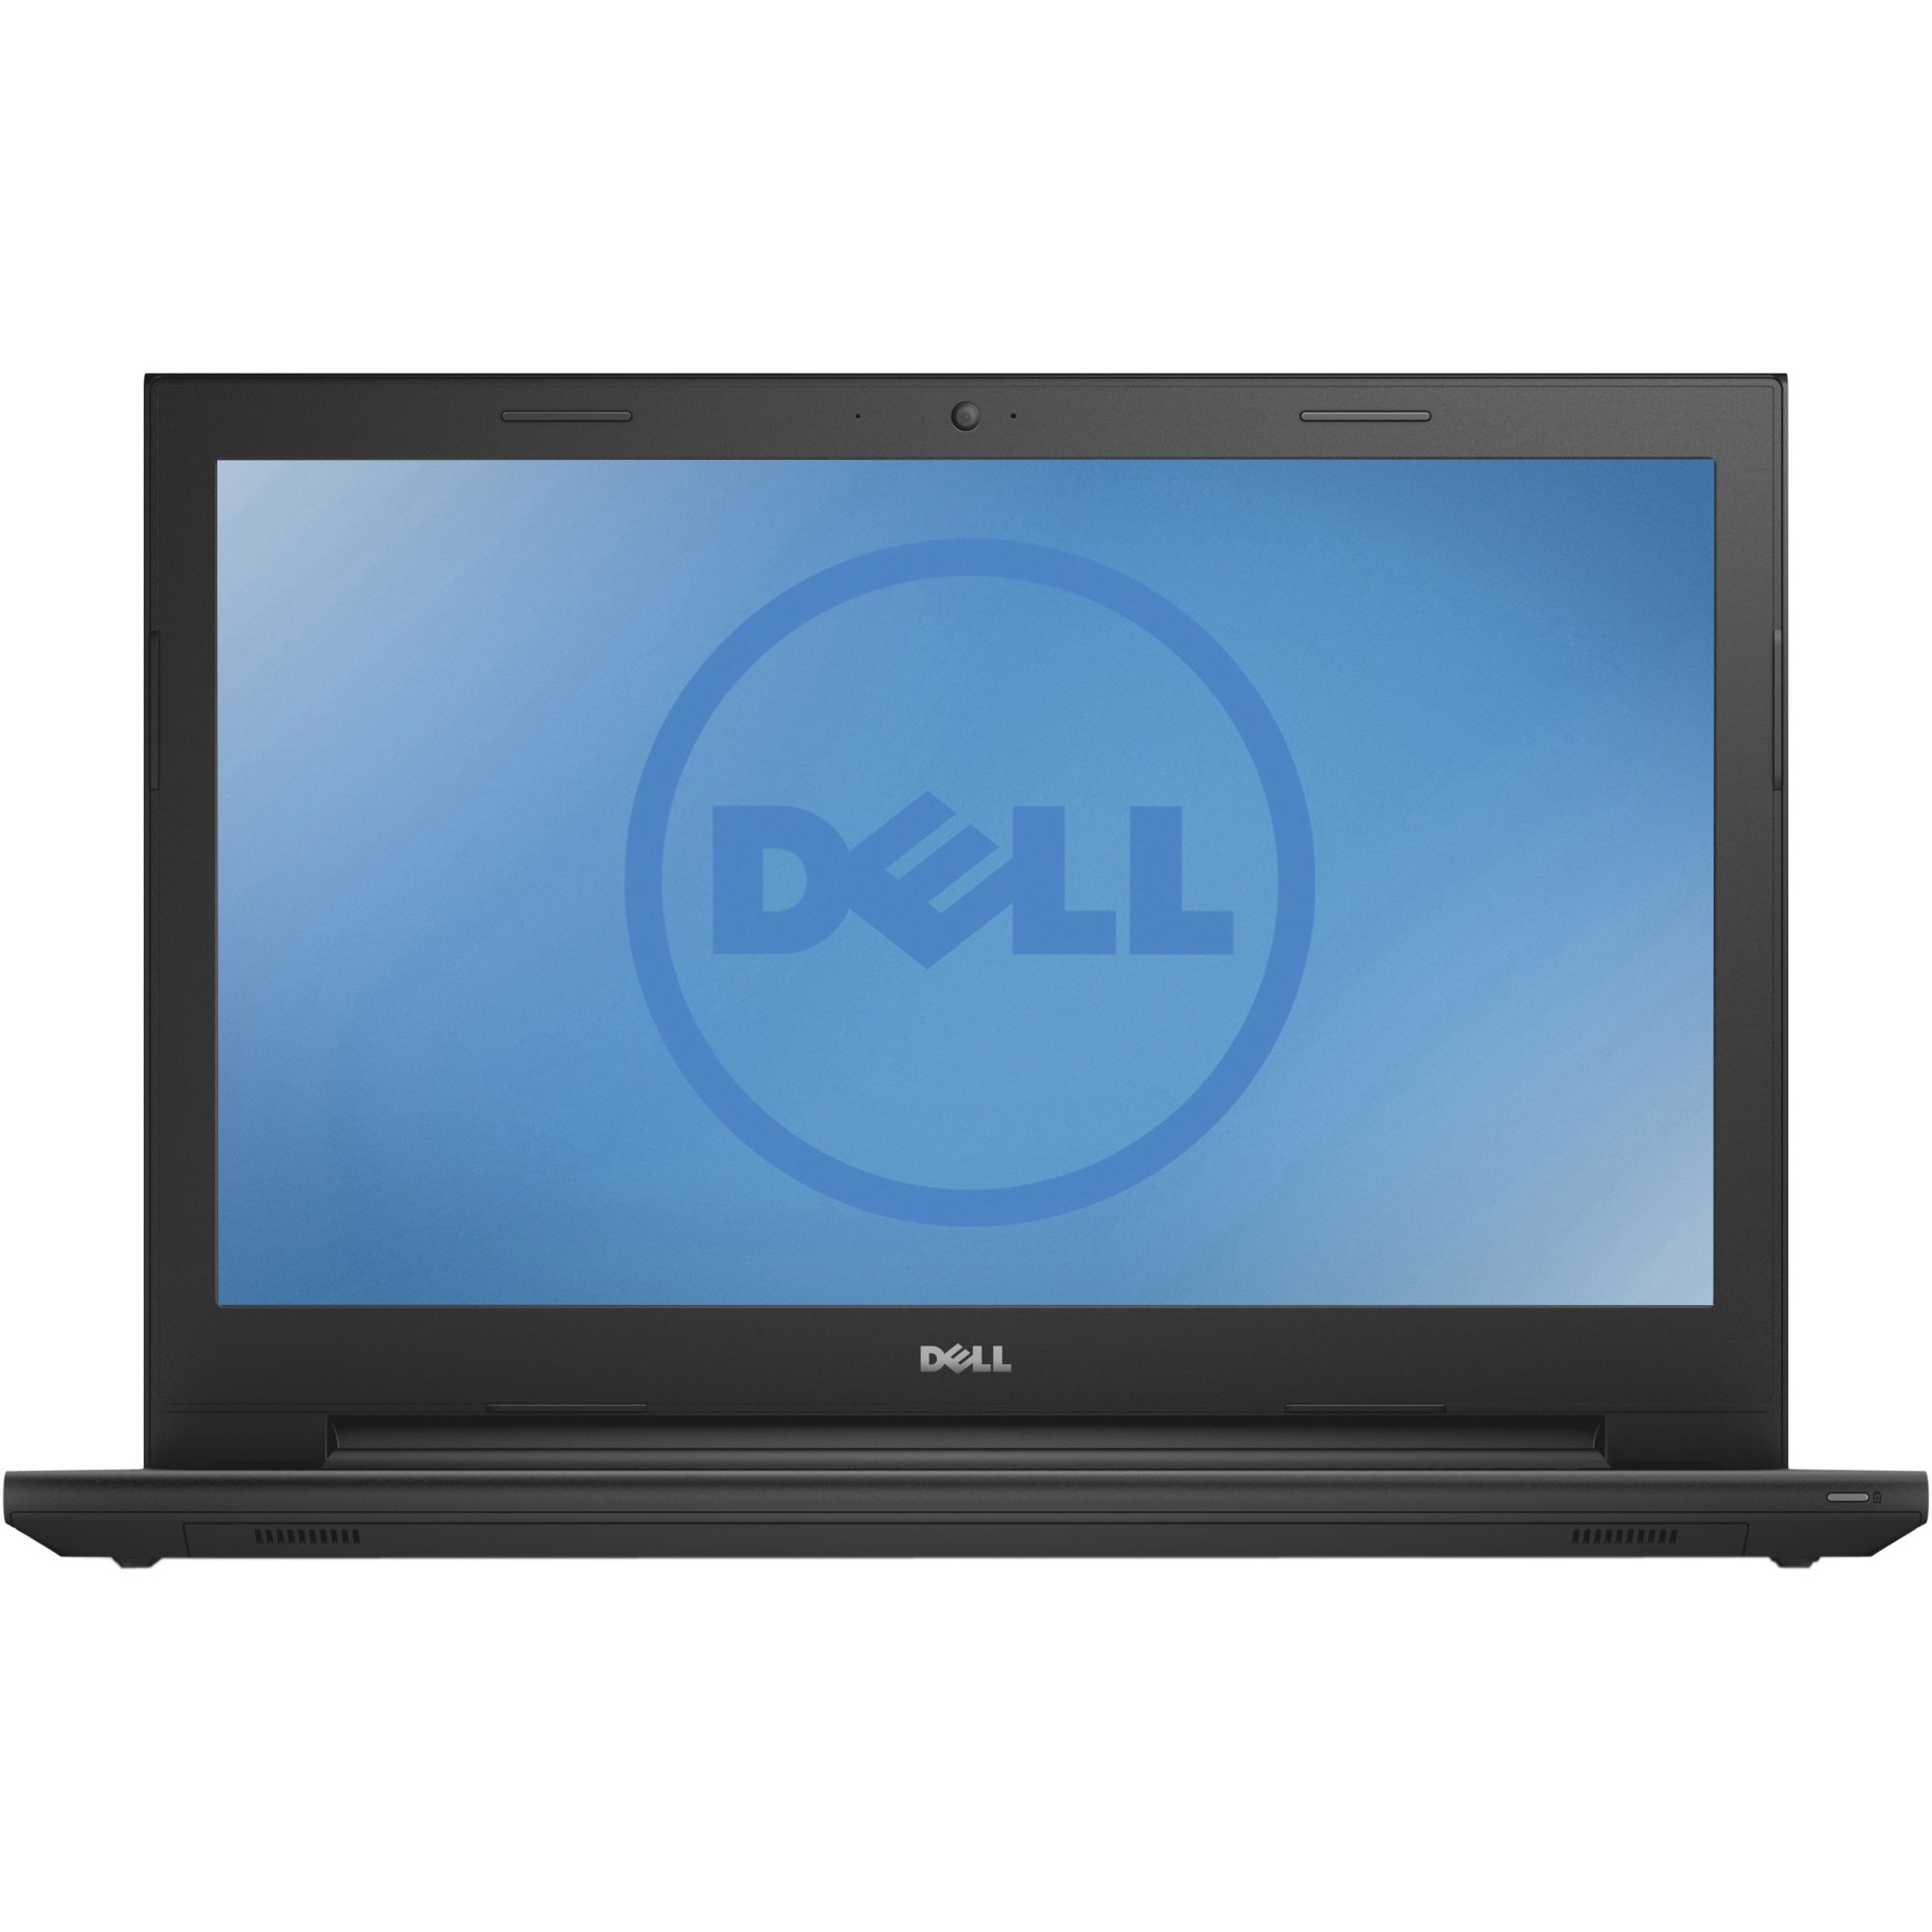  Laptop Dell Inspiron 3000, Intel Celeron N2840, 4GB DDR3, HDD 500GB, Intel HD Graphics, Linux 